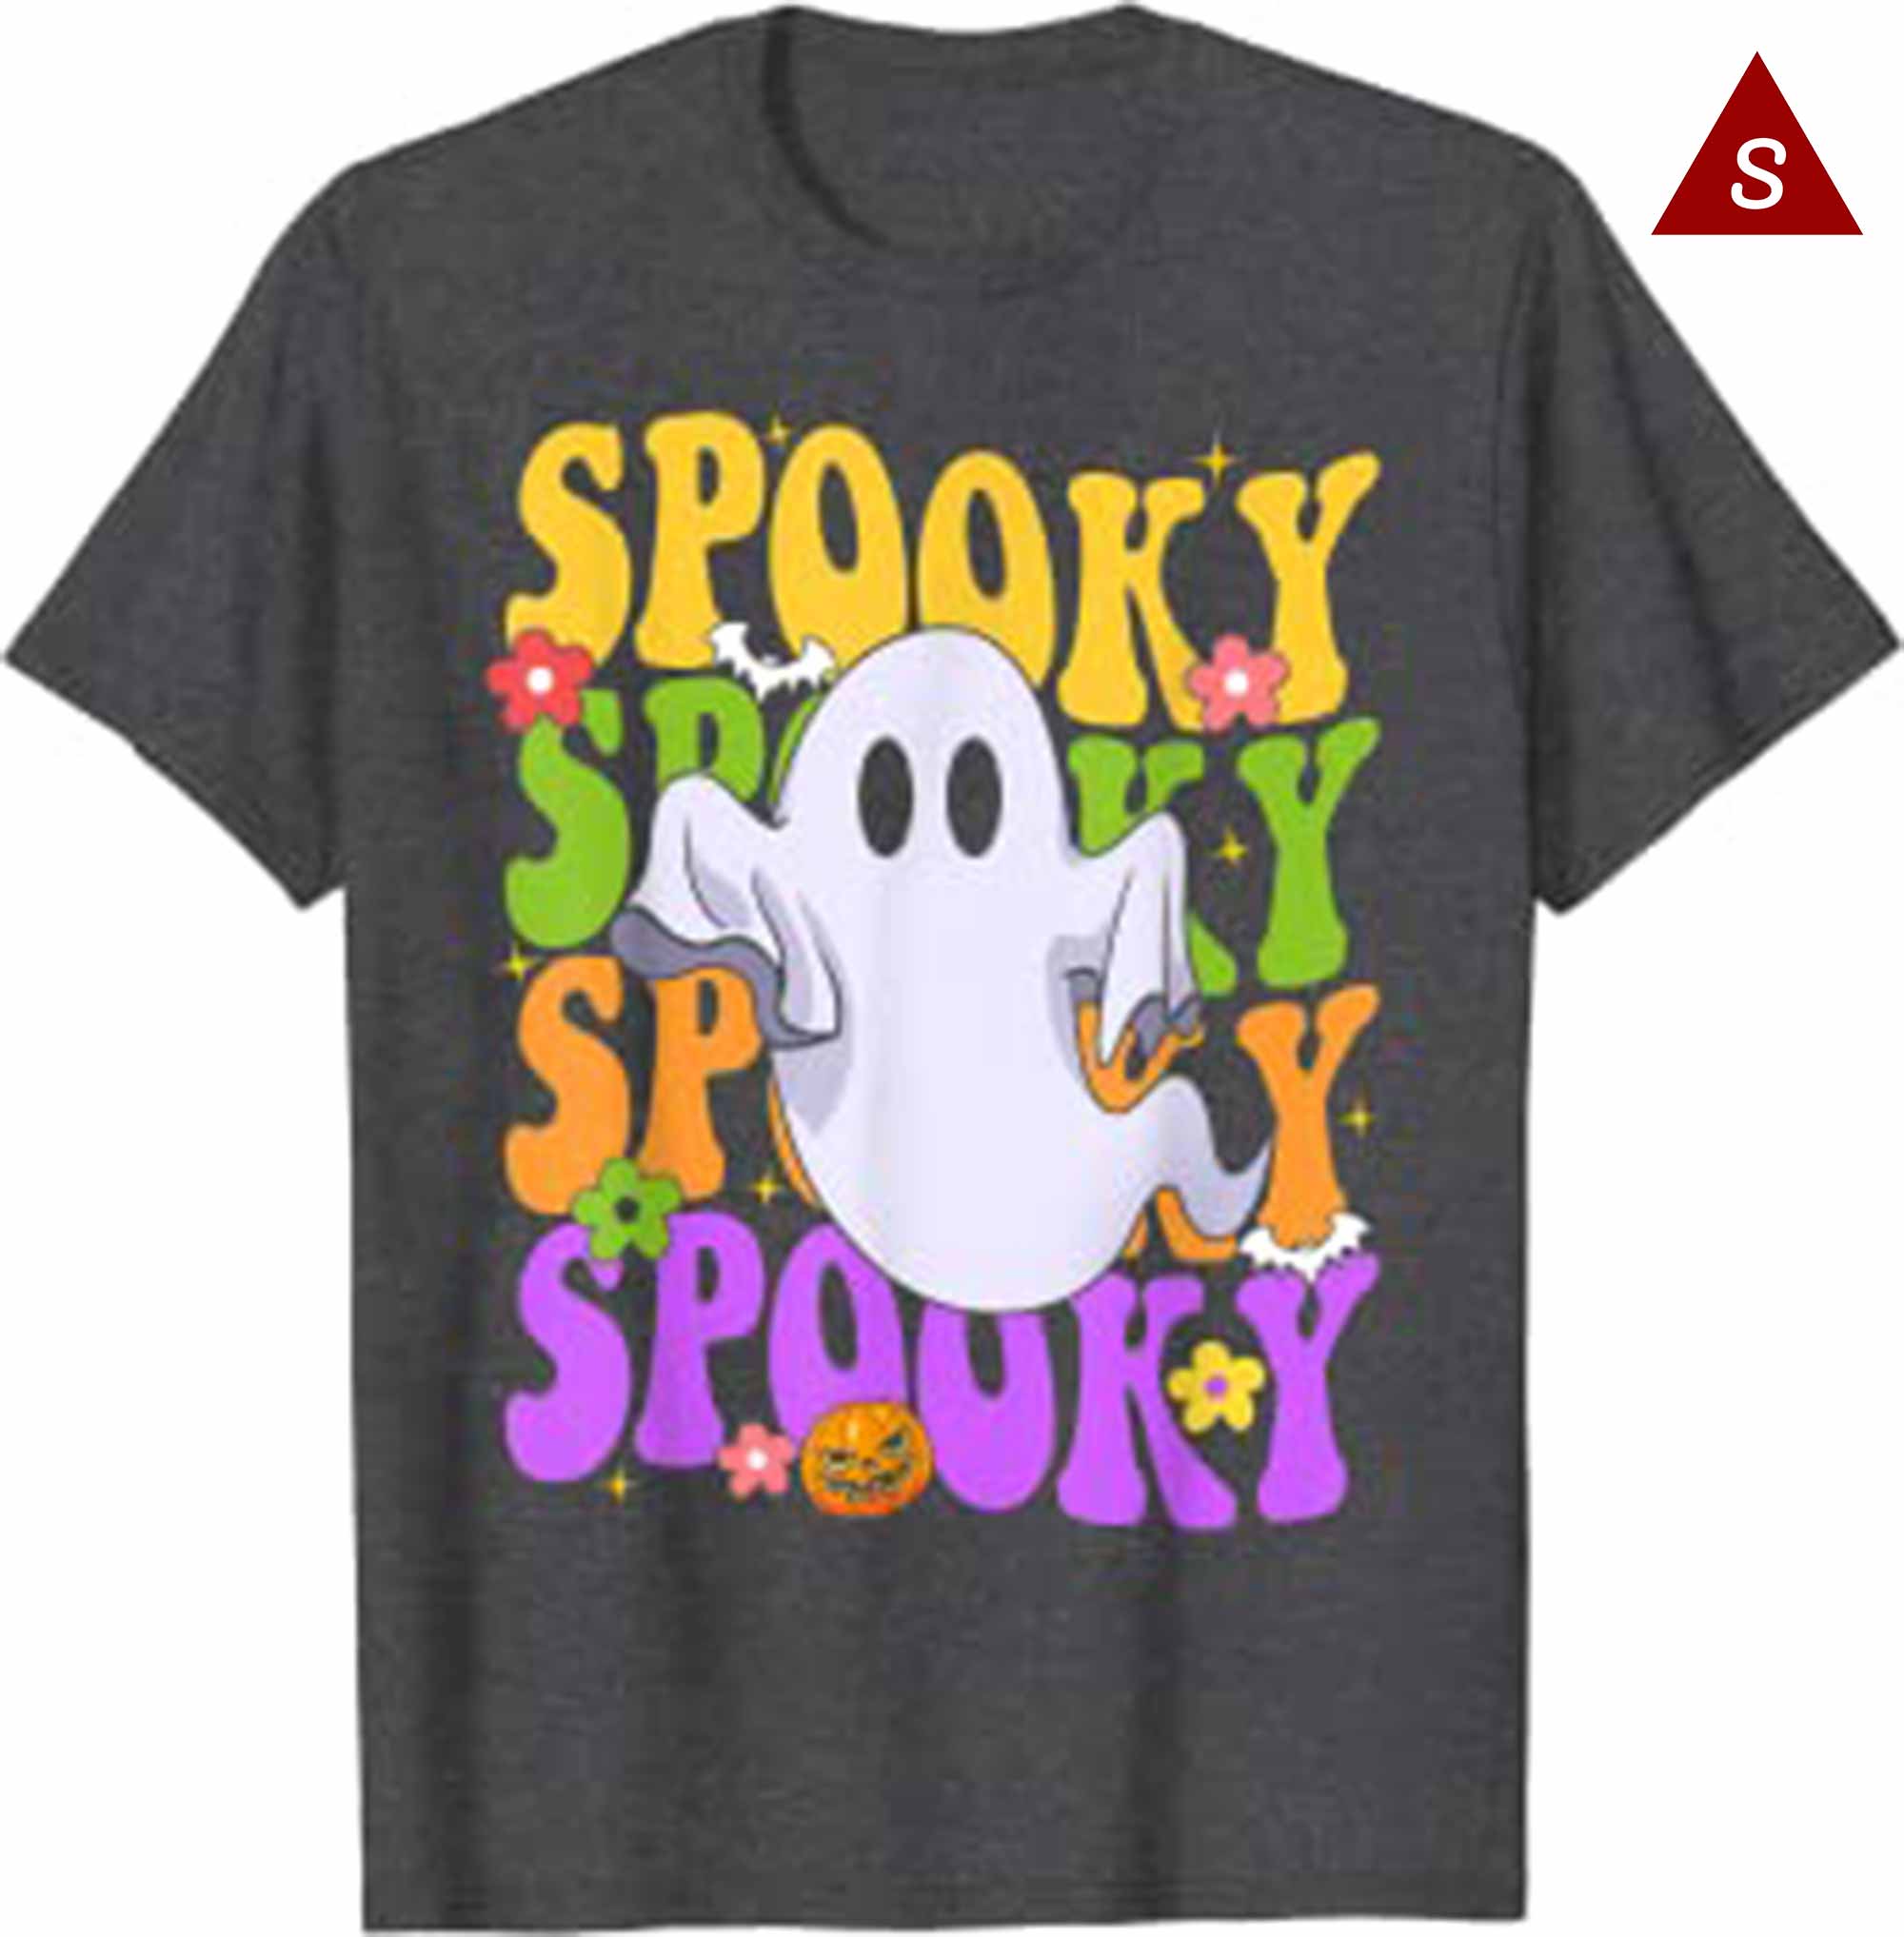 Skitongift Retro Groovy Ghost Halloween Costume Shirts Spooky Vibes T Shirt